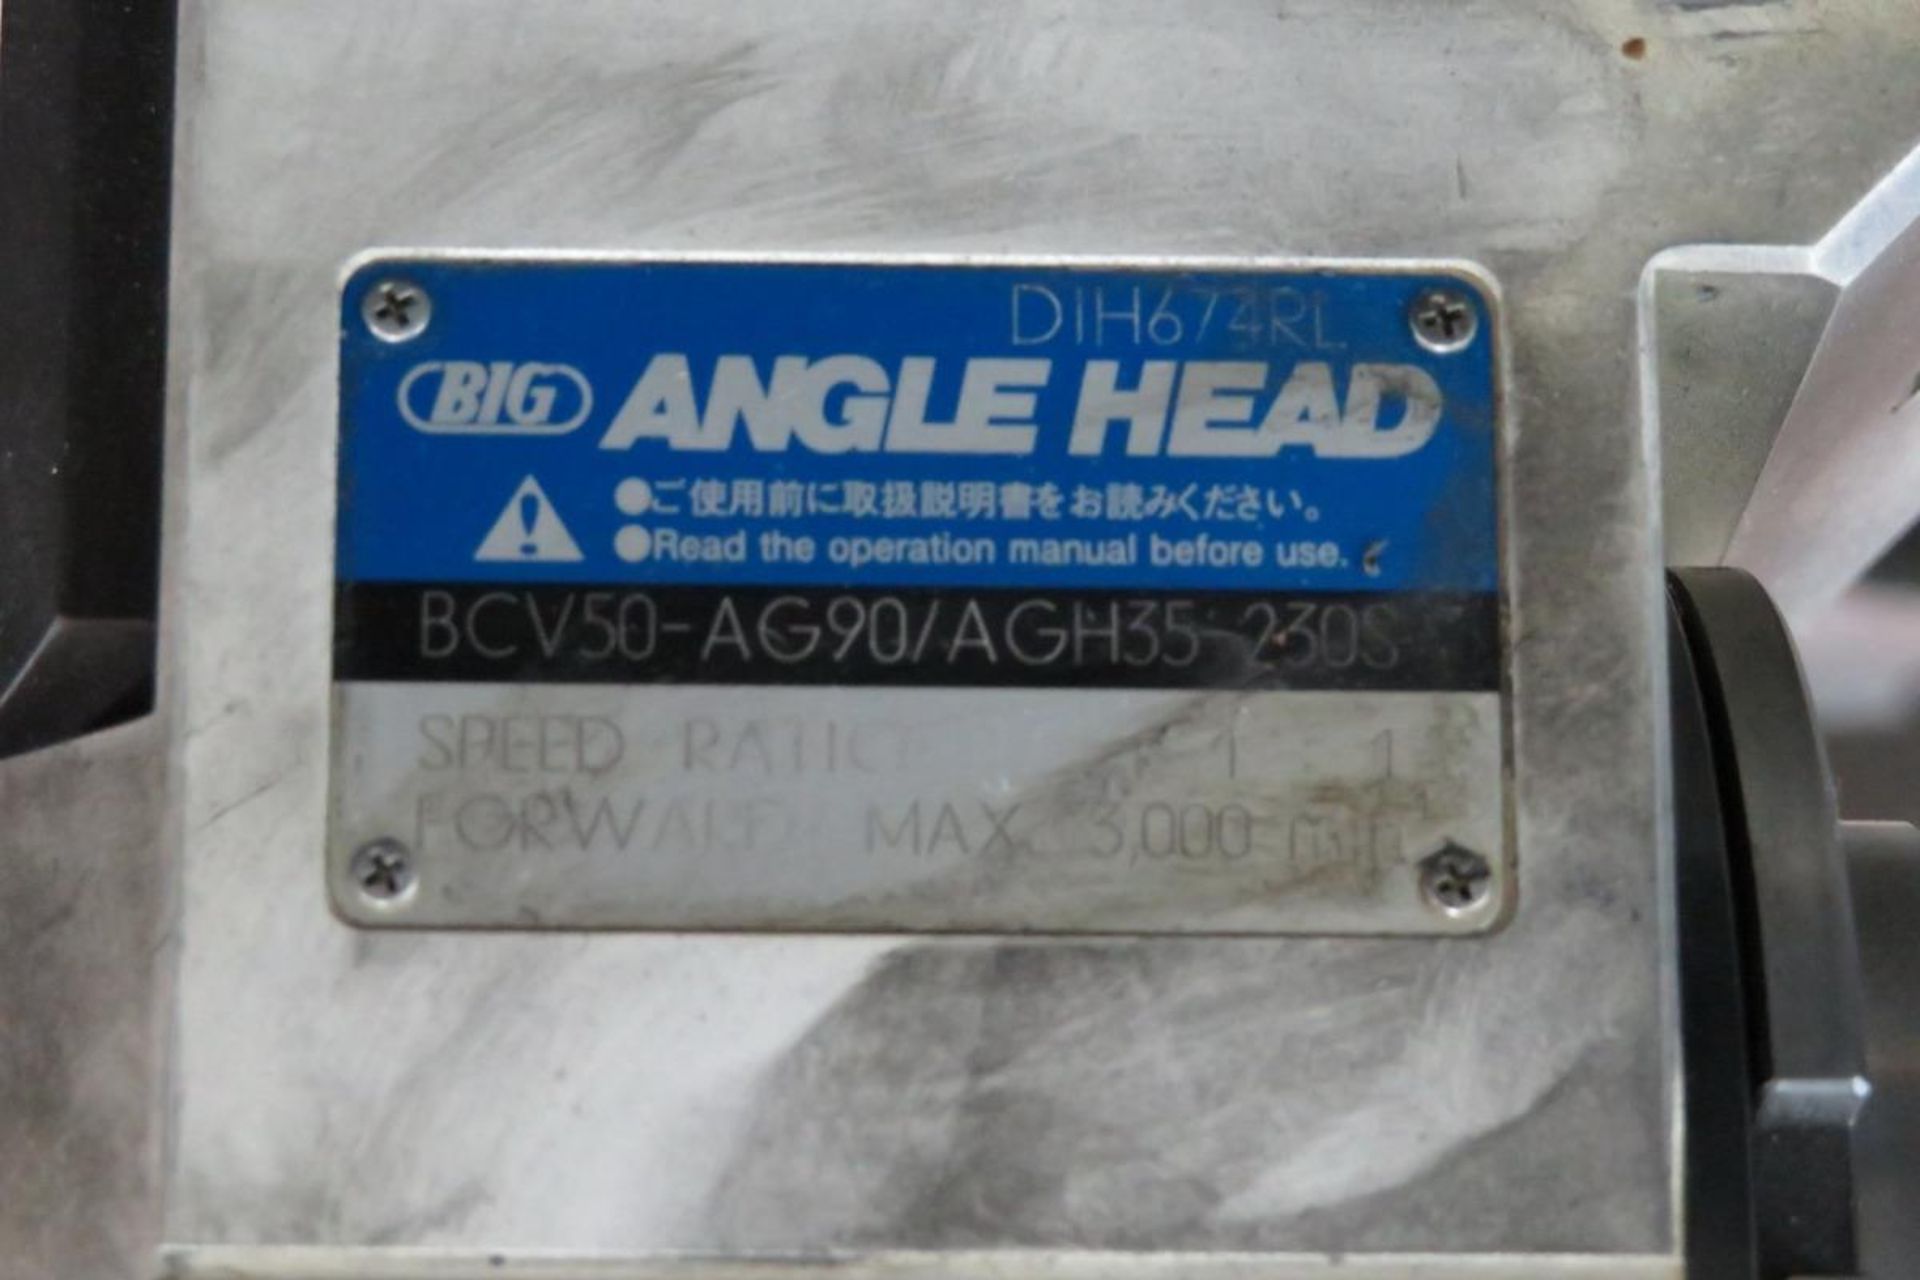 BIG BCV50-AG90/AGH35-2305 Cat 50 Angle Head Live Tool Holder - Image 3 of 3